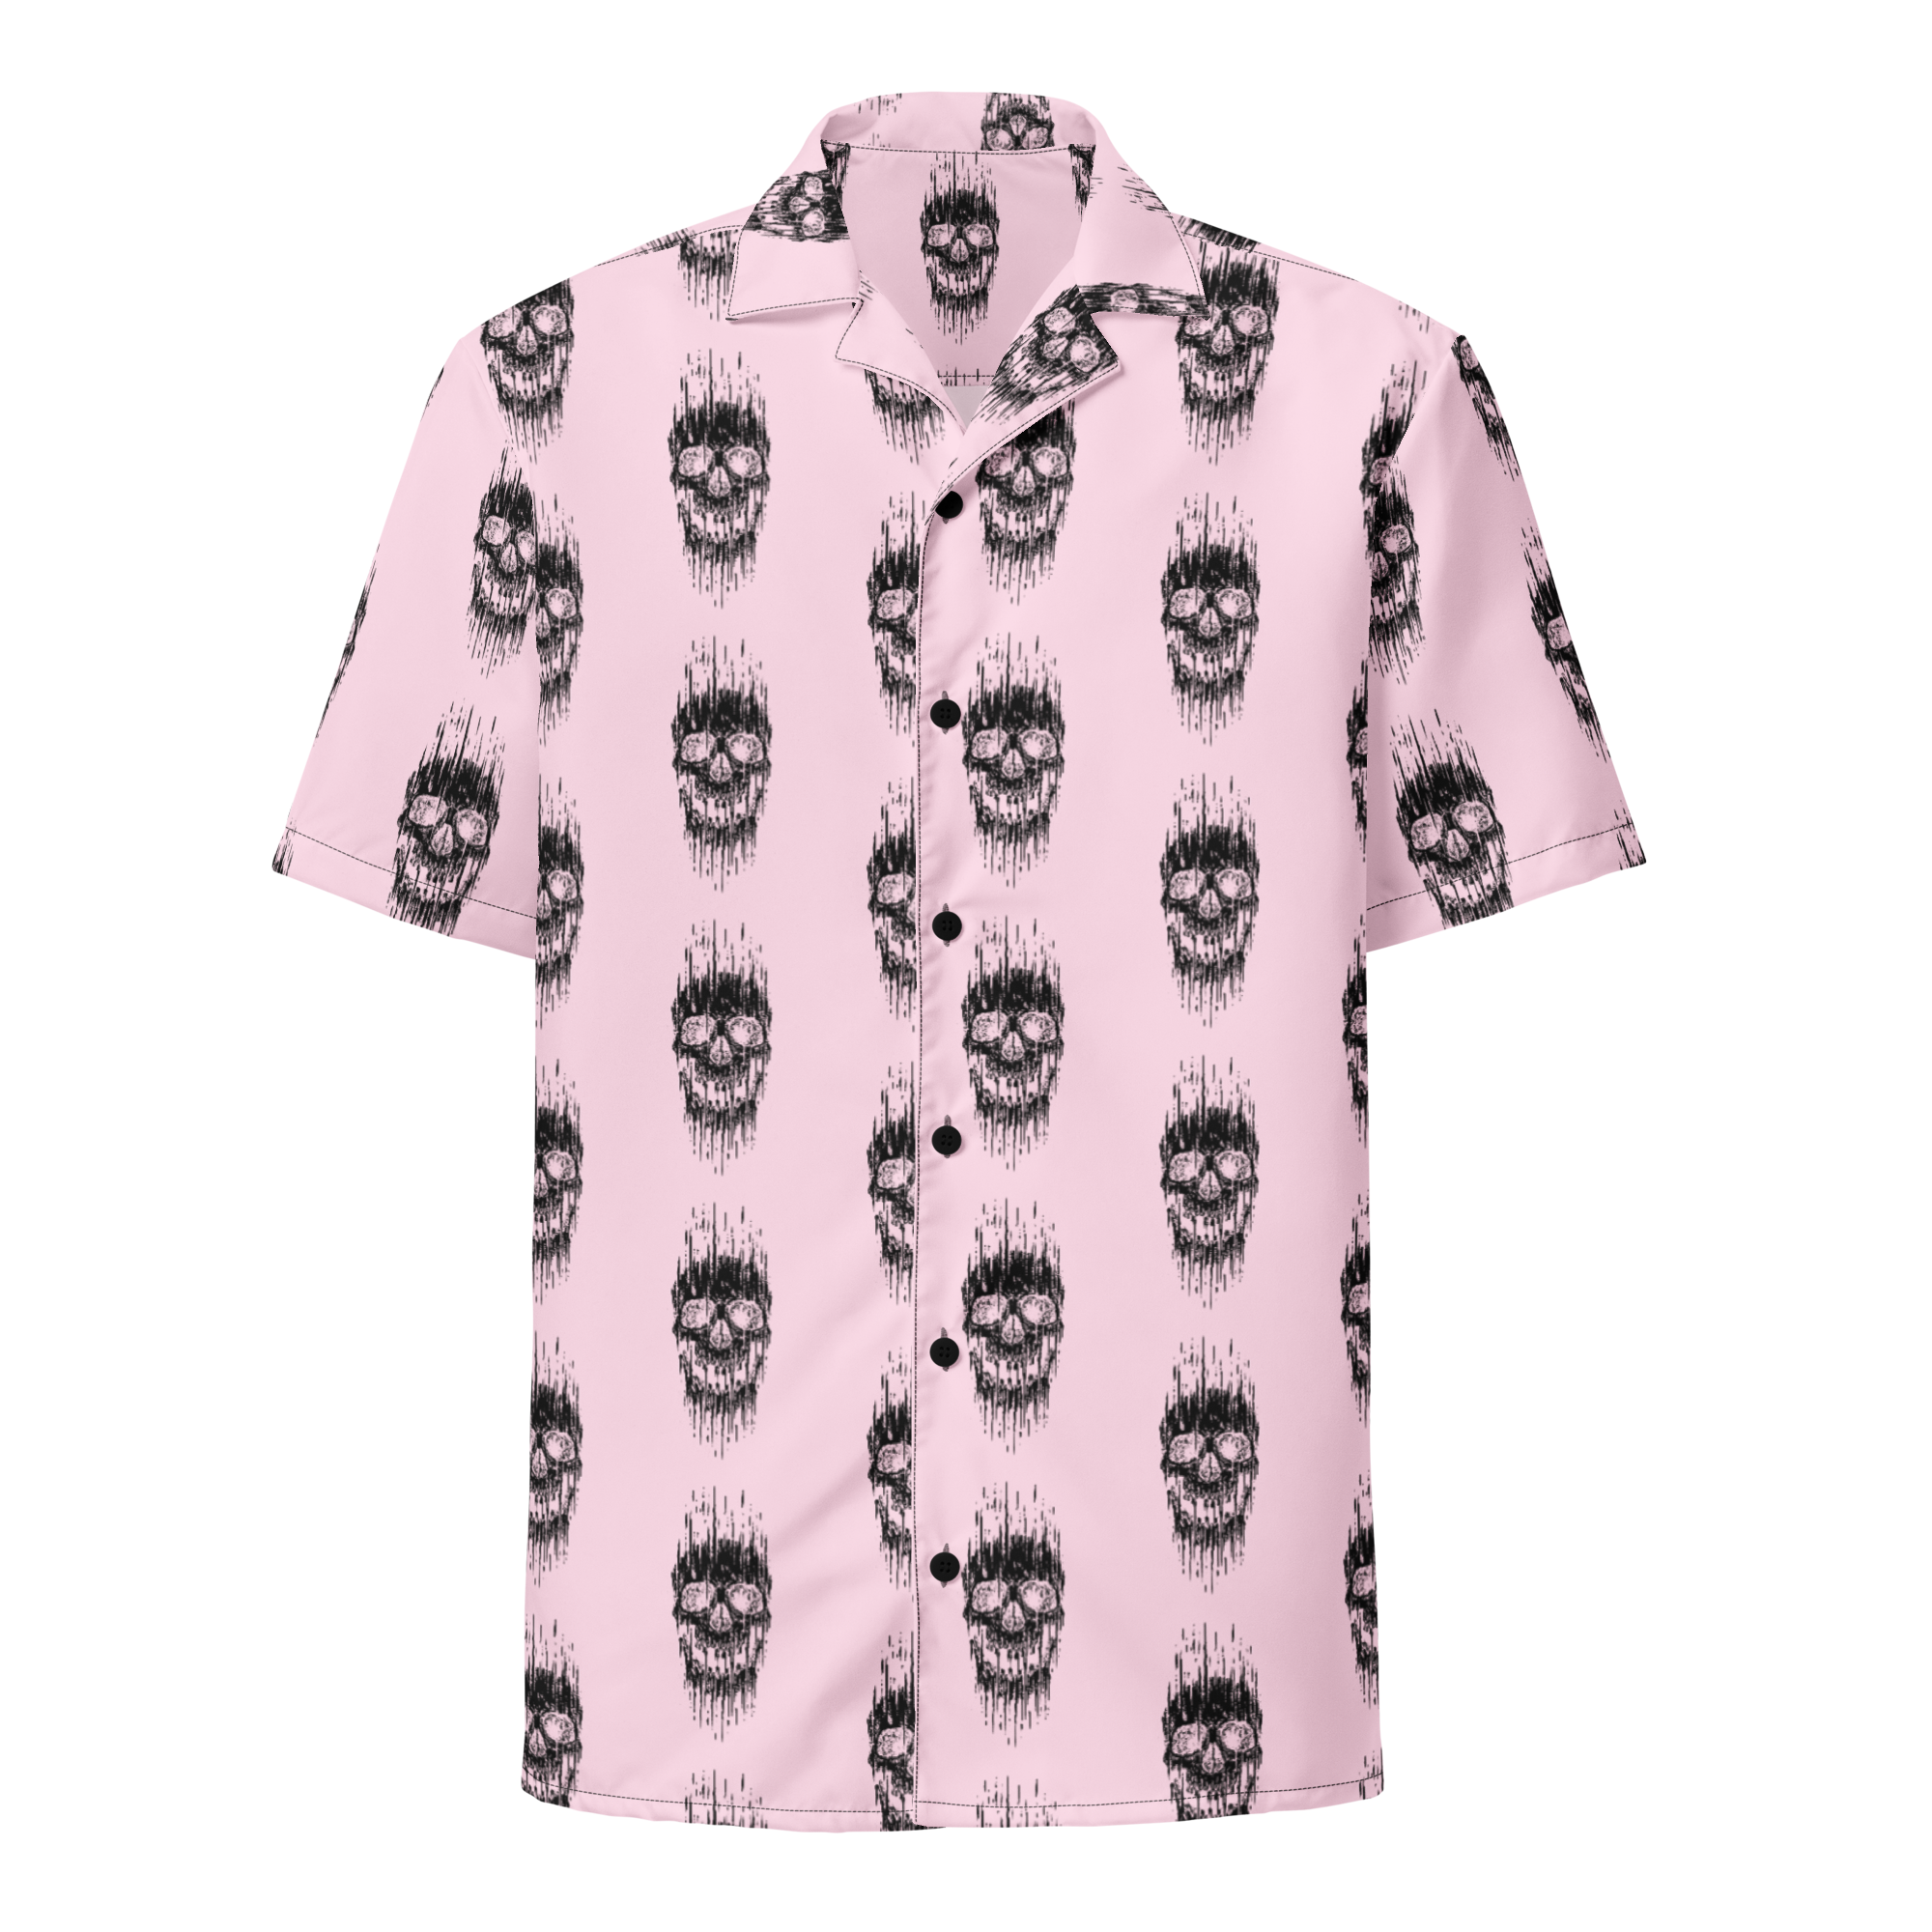 Skully Unisex button shirt